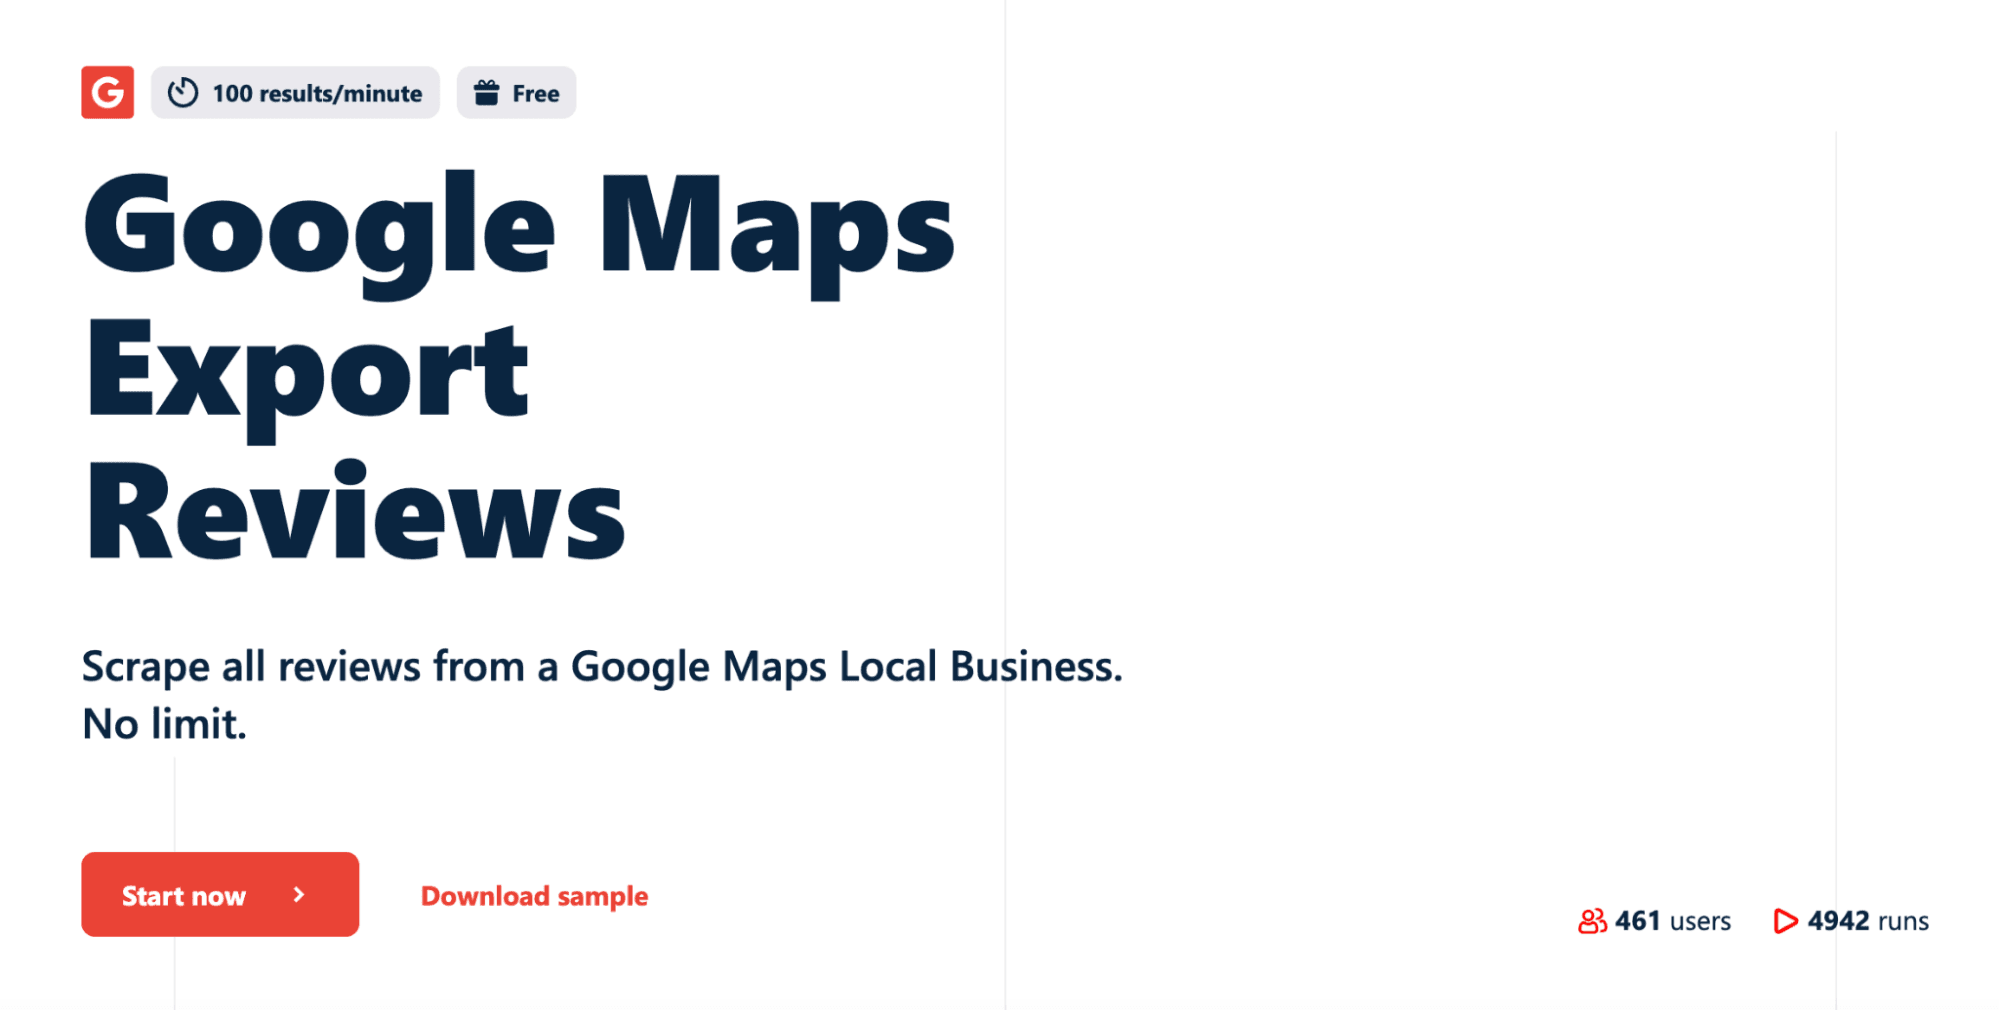 google maps export reviews - image11.png